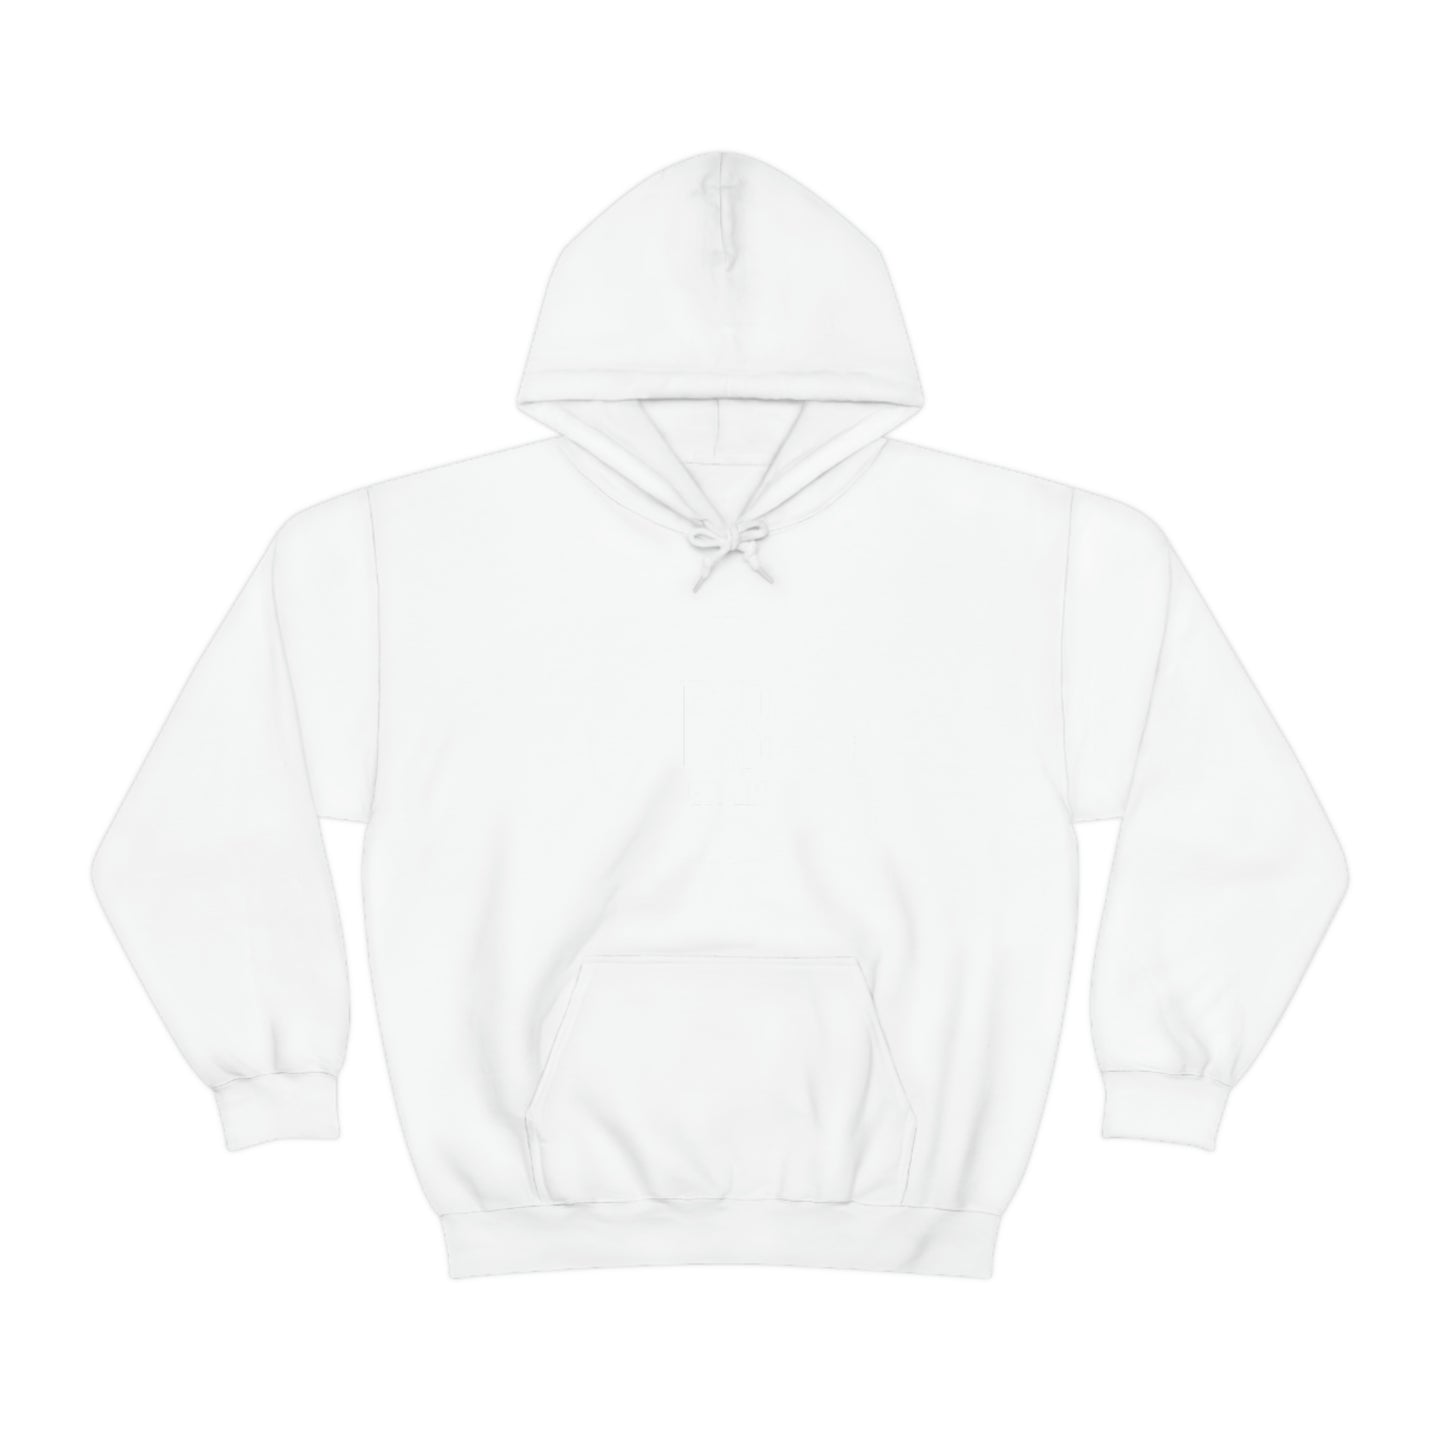 +- DB Jett - Unisex Heavy Blend™ Hooded Sweatshirt